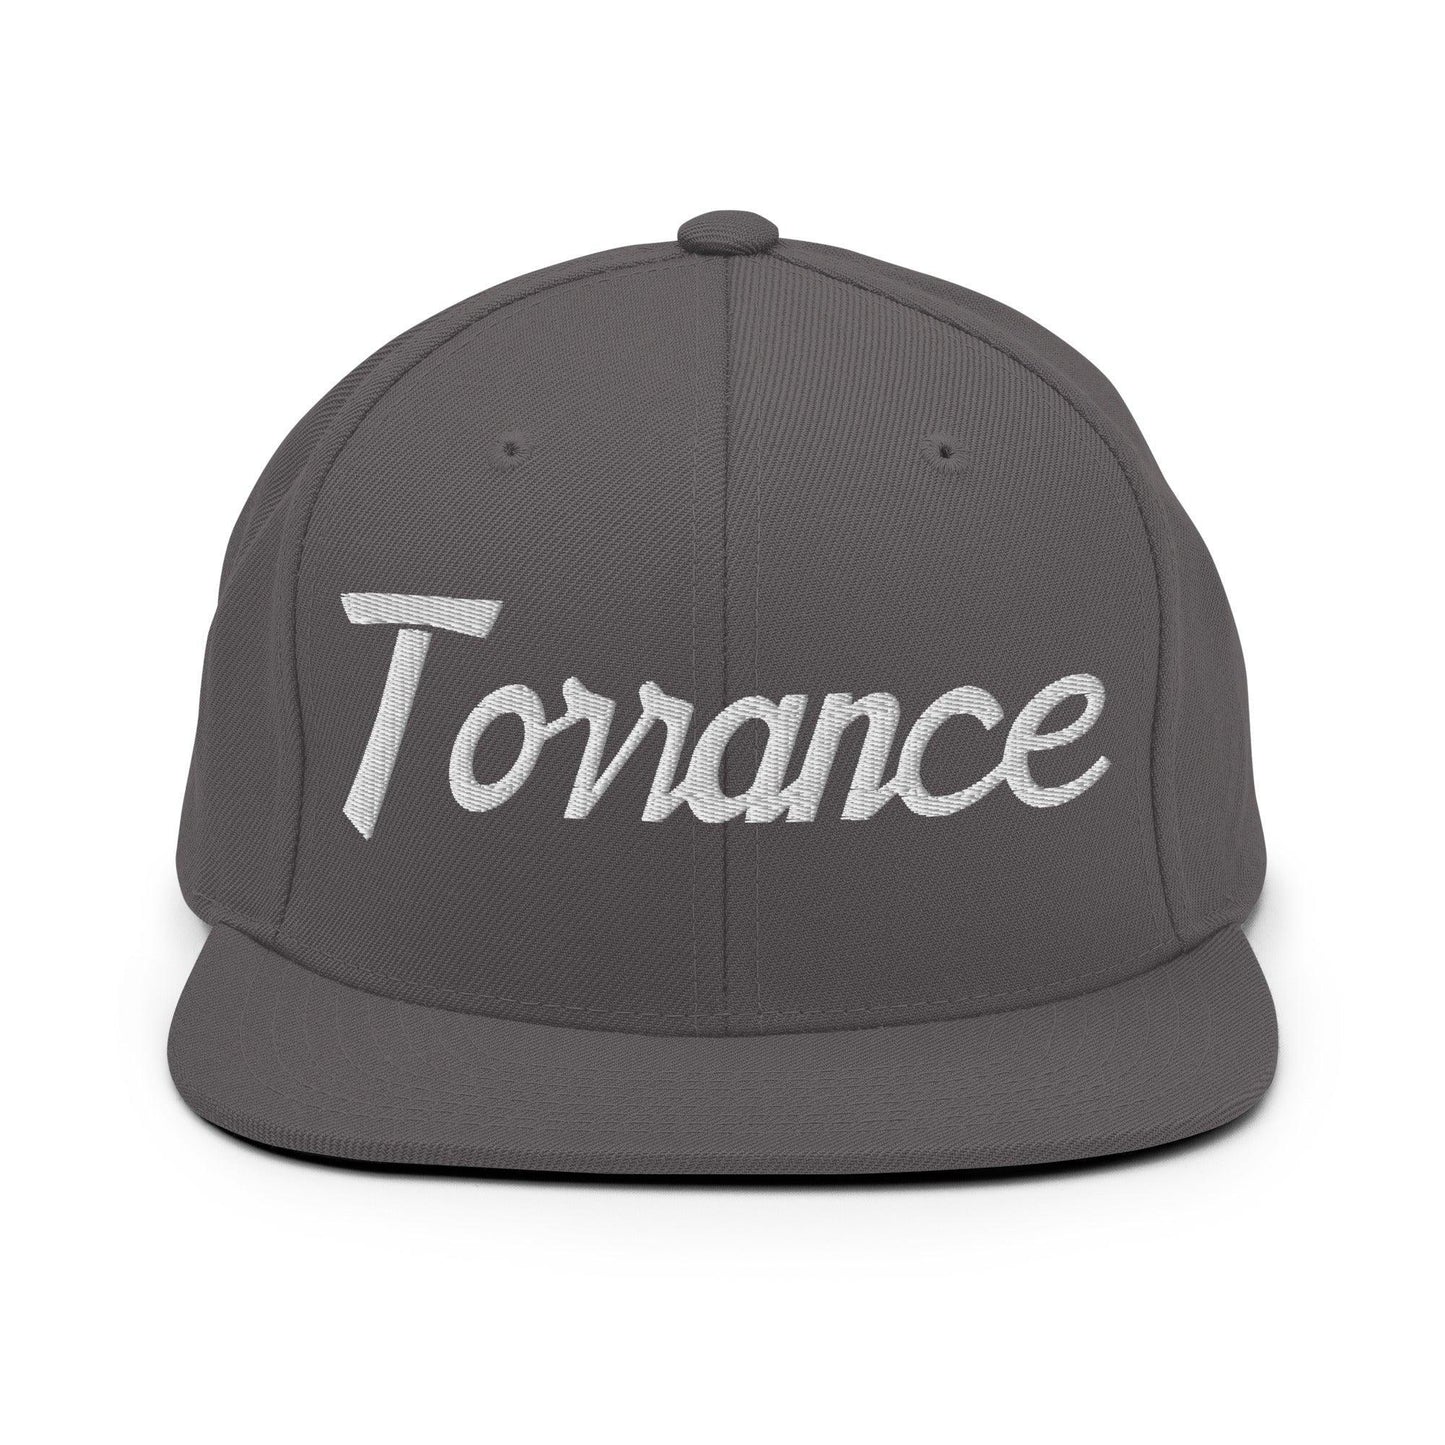 Torrance Script Snapback Hat Dark Grey